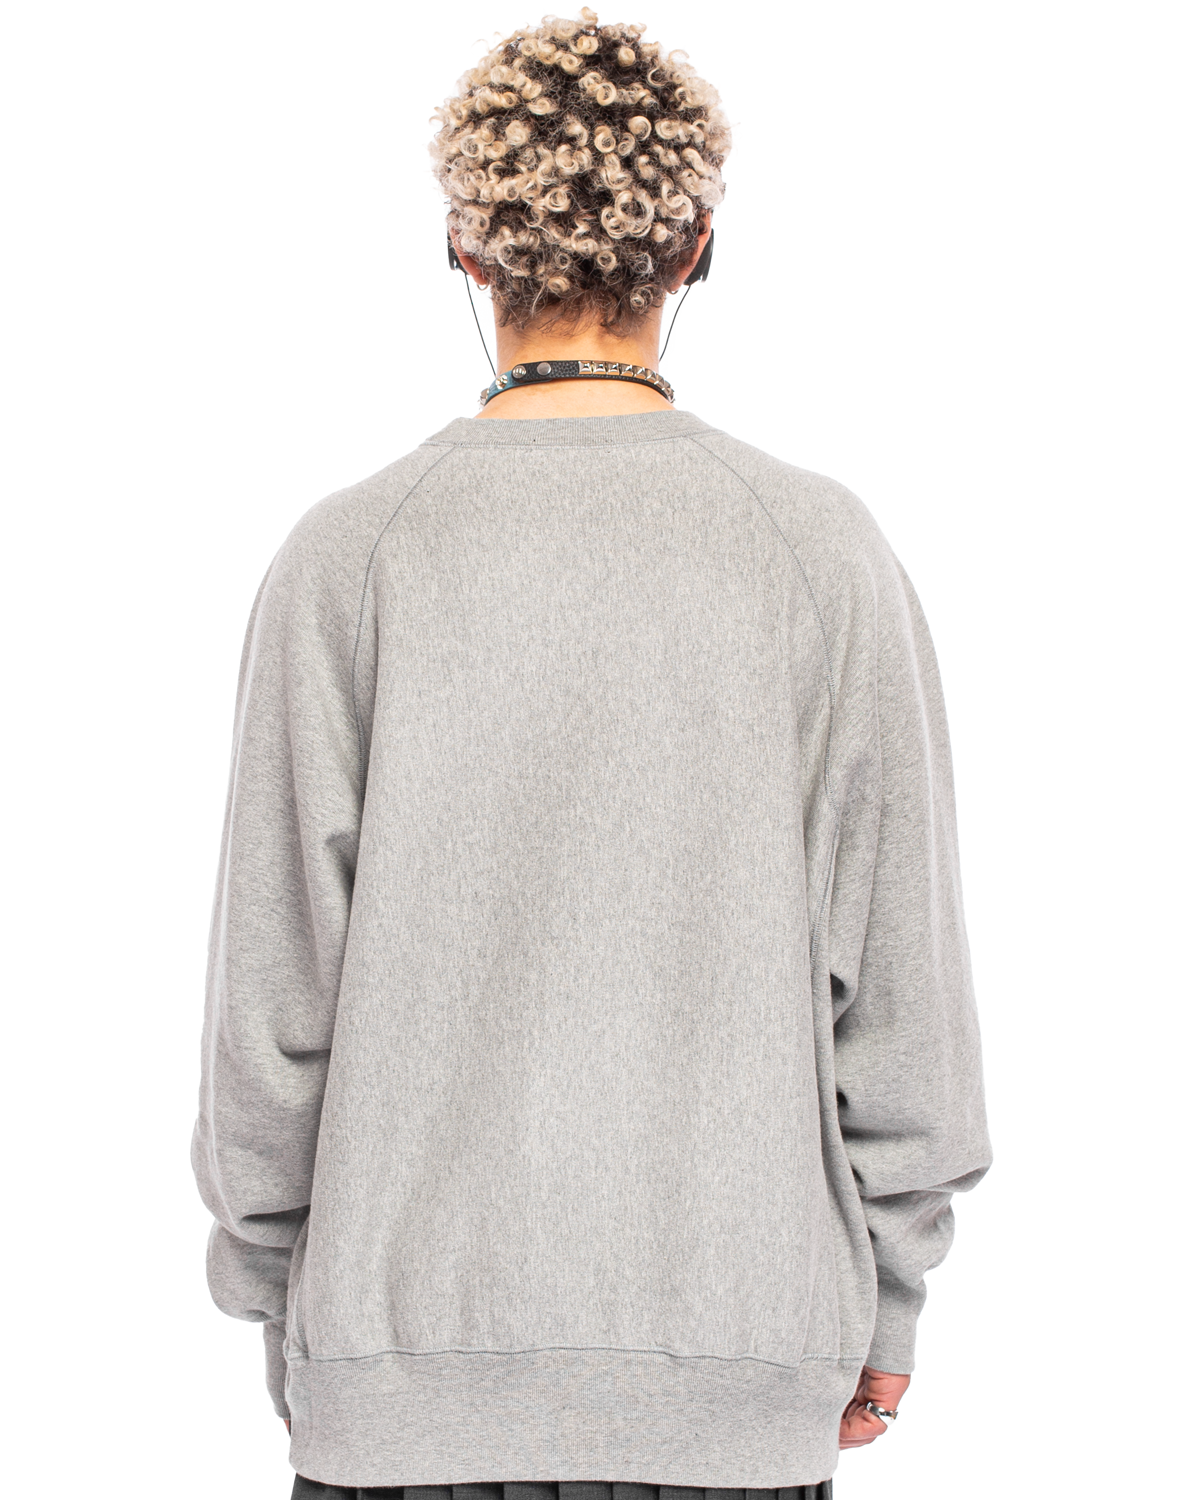 UC2B4801-3 Psycho Sweatshirt Gray